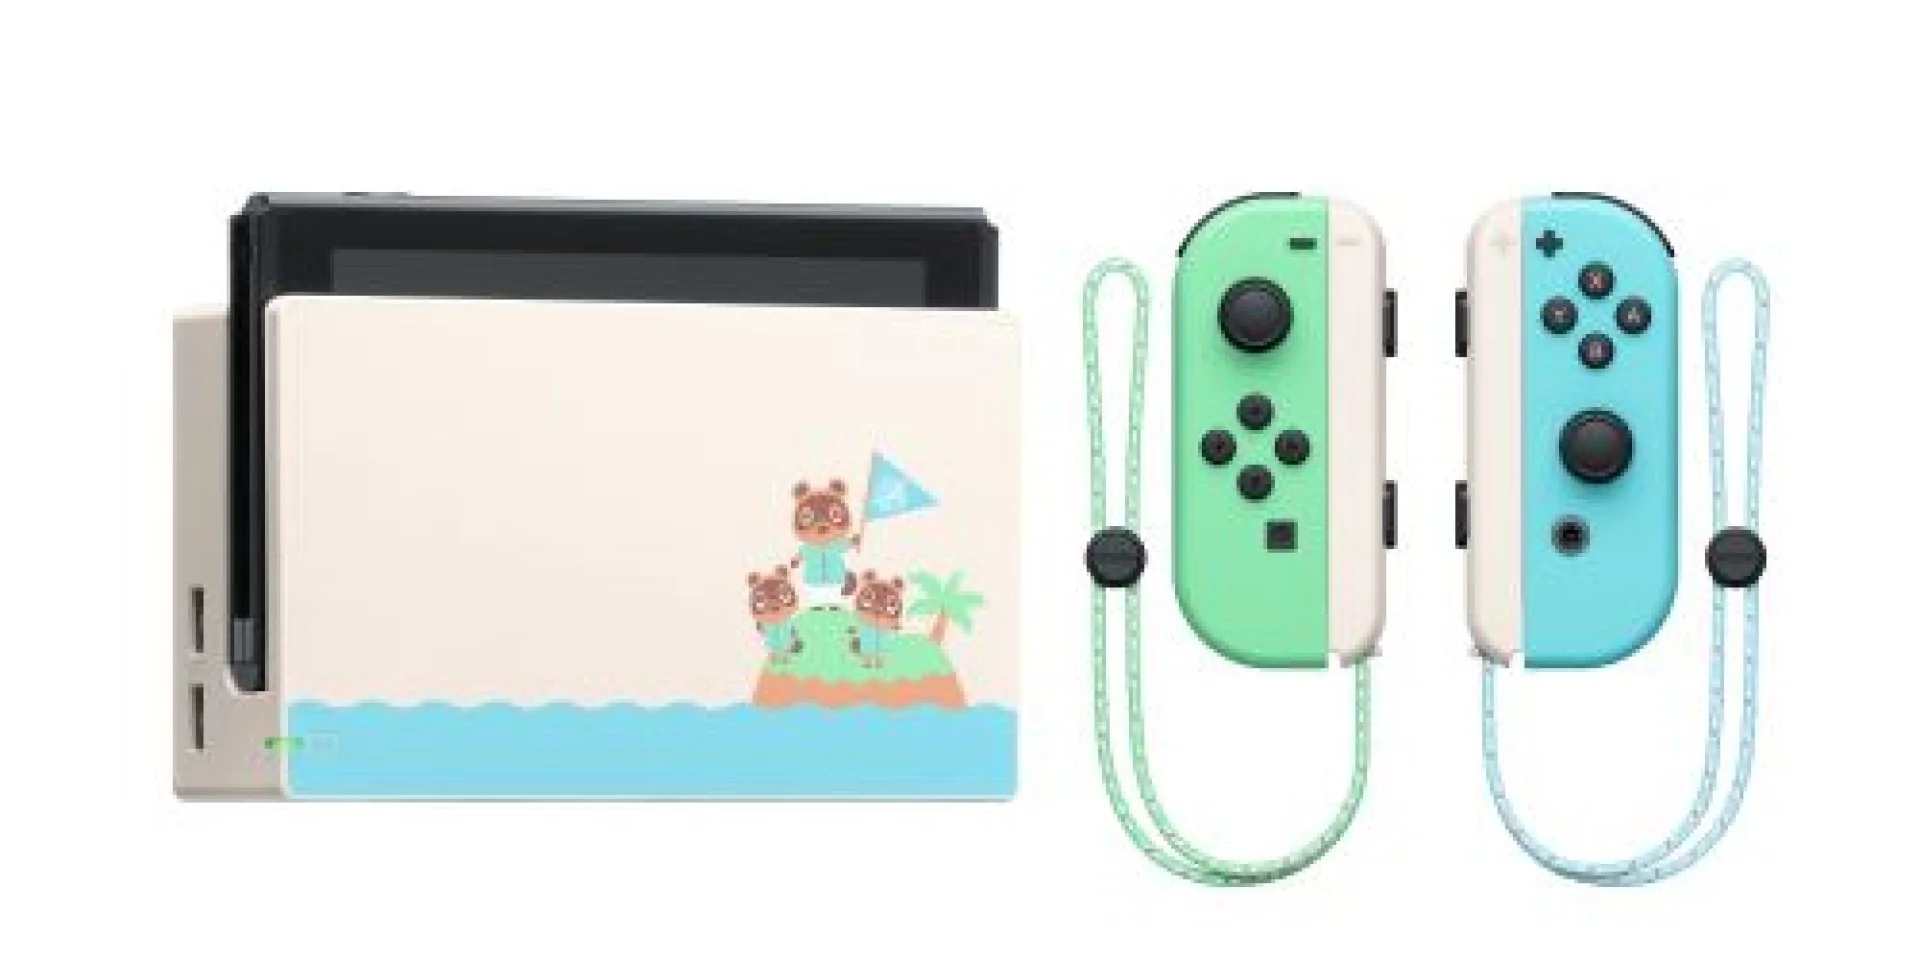  Nintendo Switch Animal Crossing New Horizons Console [AUS]